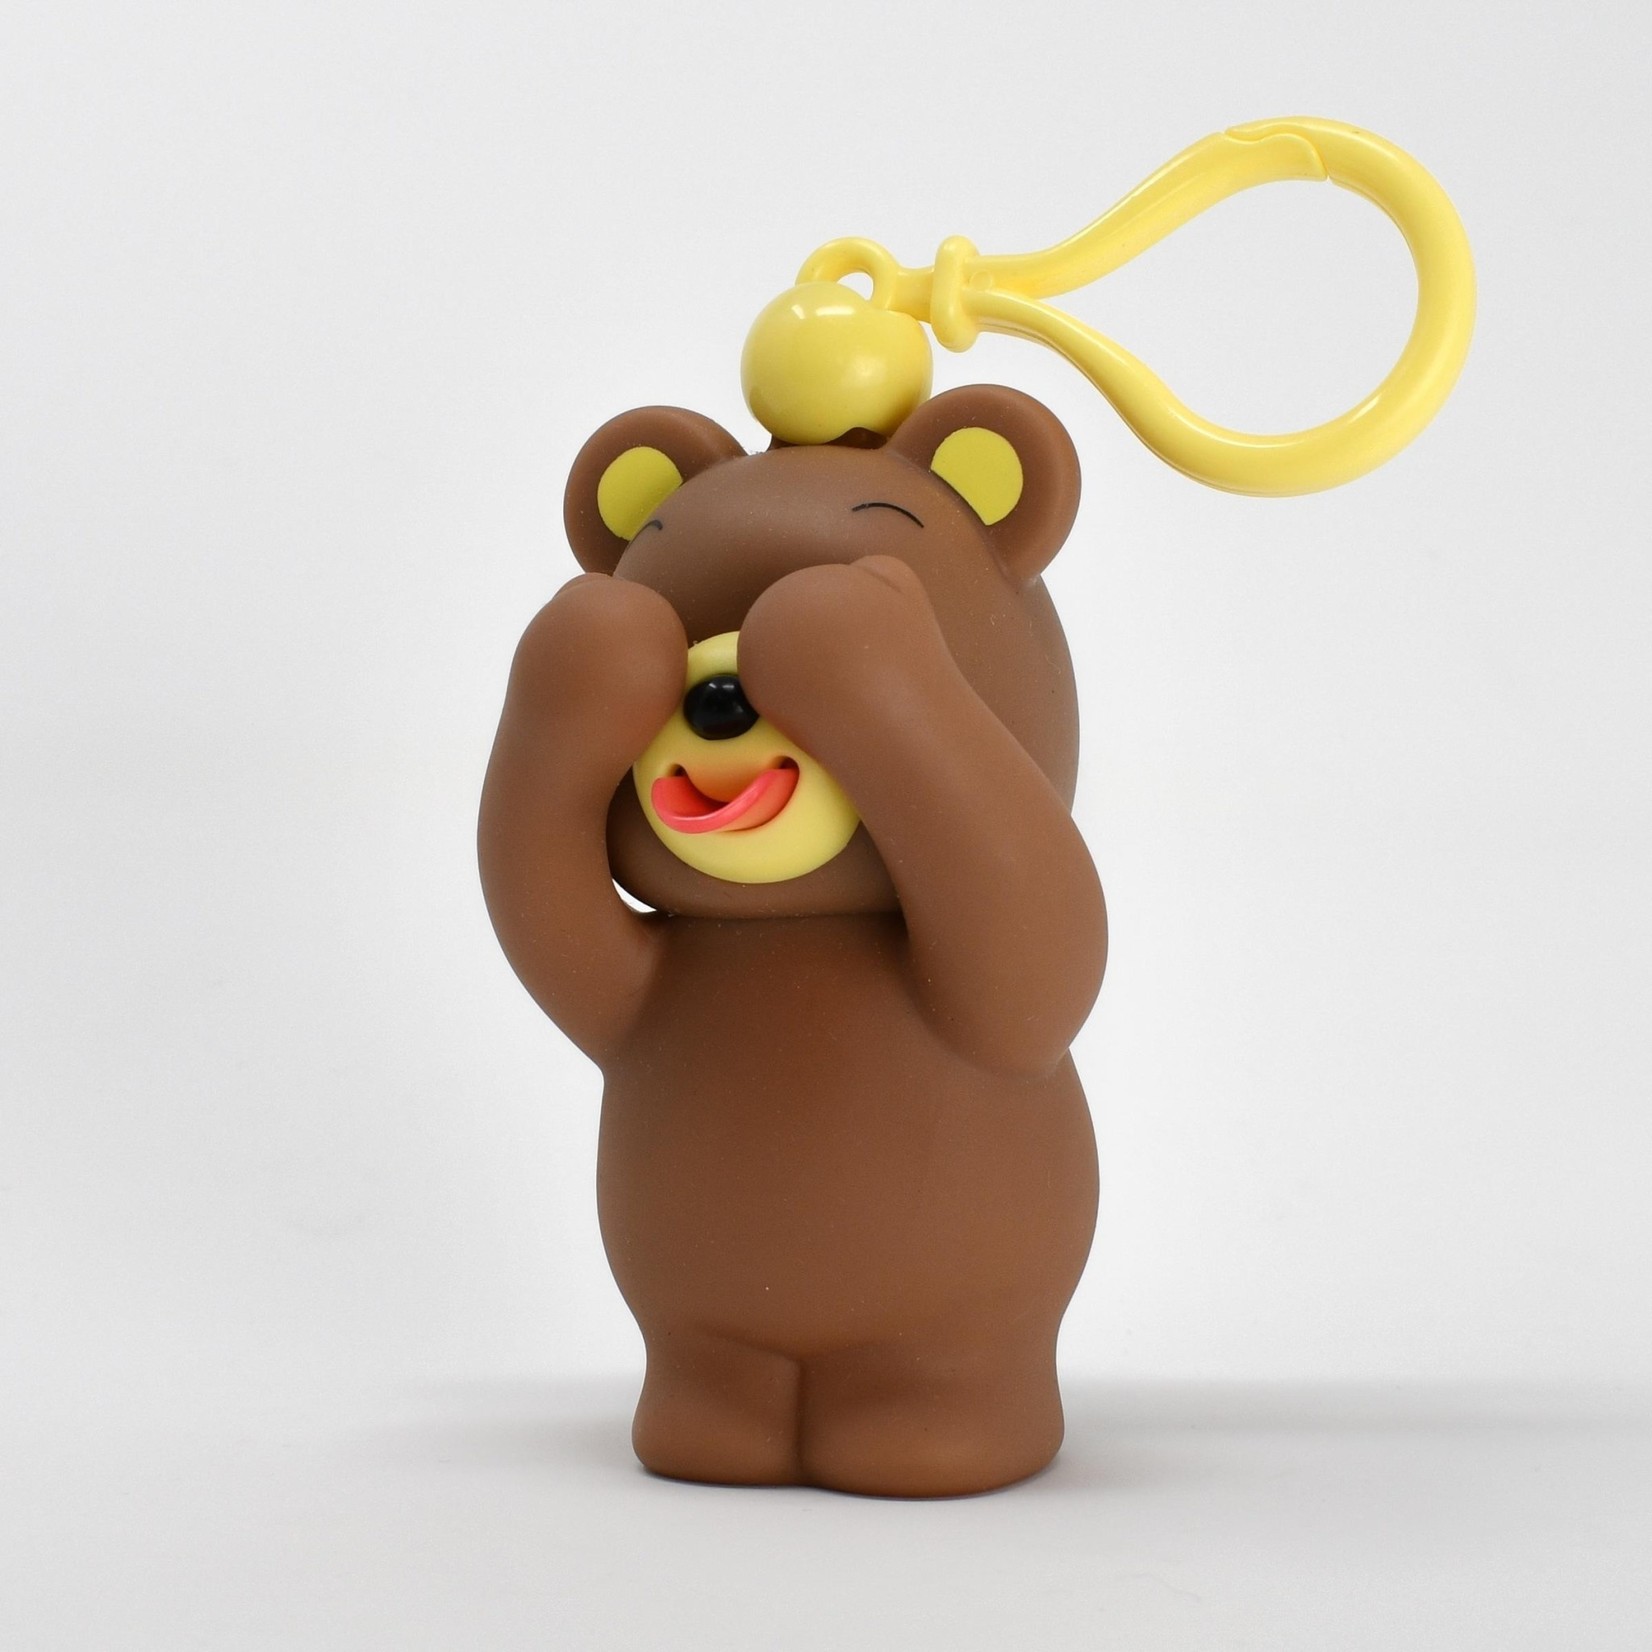 Sankyo Toys/JabberBall Jabb-a-Boo Bear